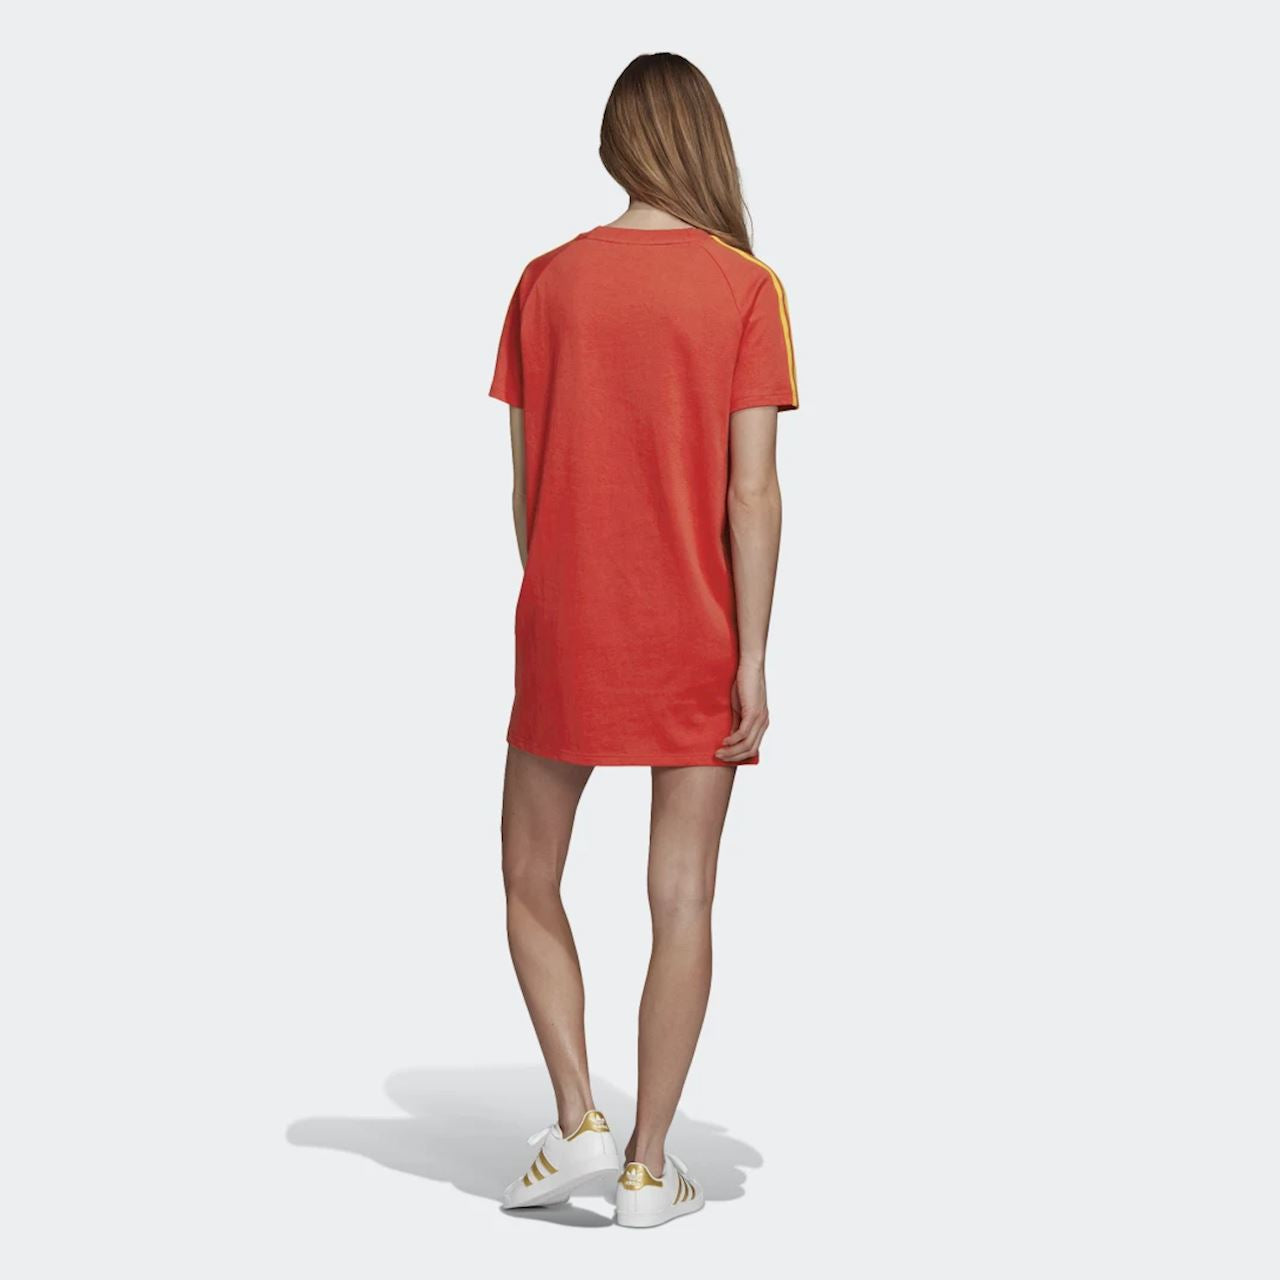 tradesports.co.uk Adidas Originals Women's Spain Tee Dress - Red